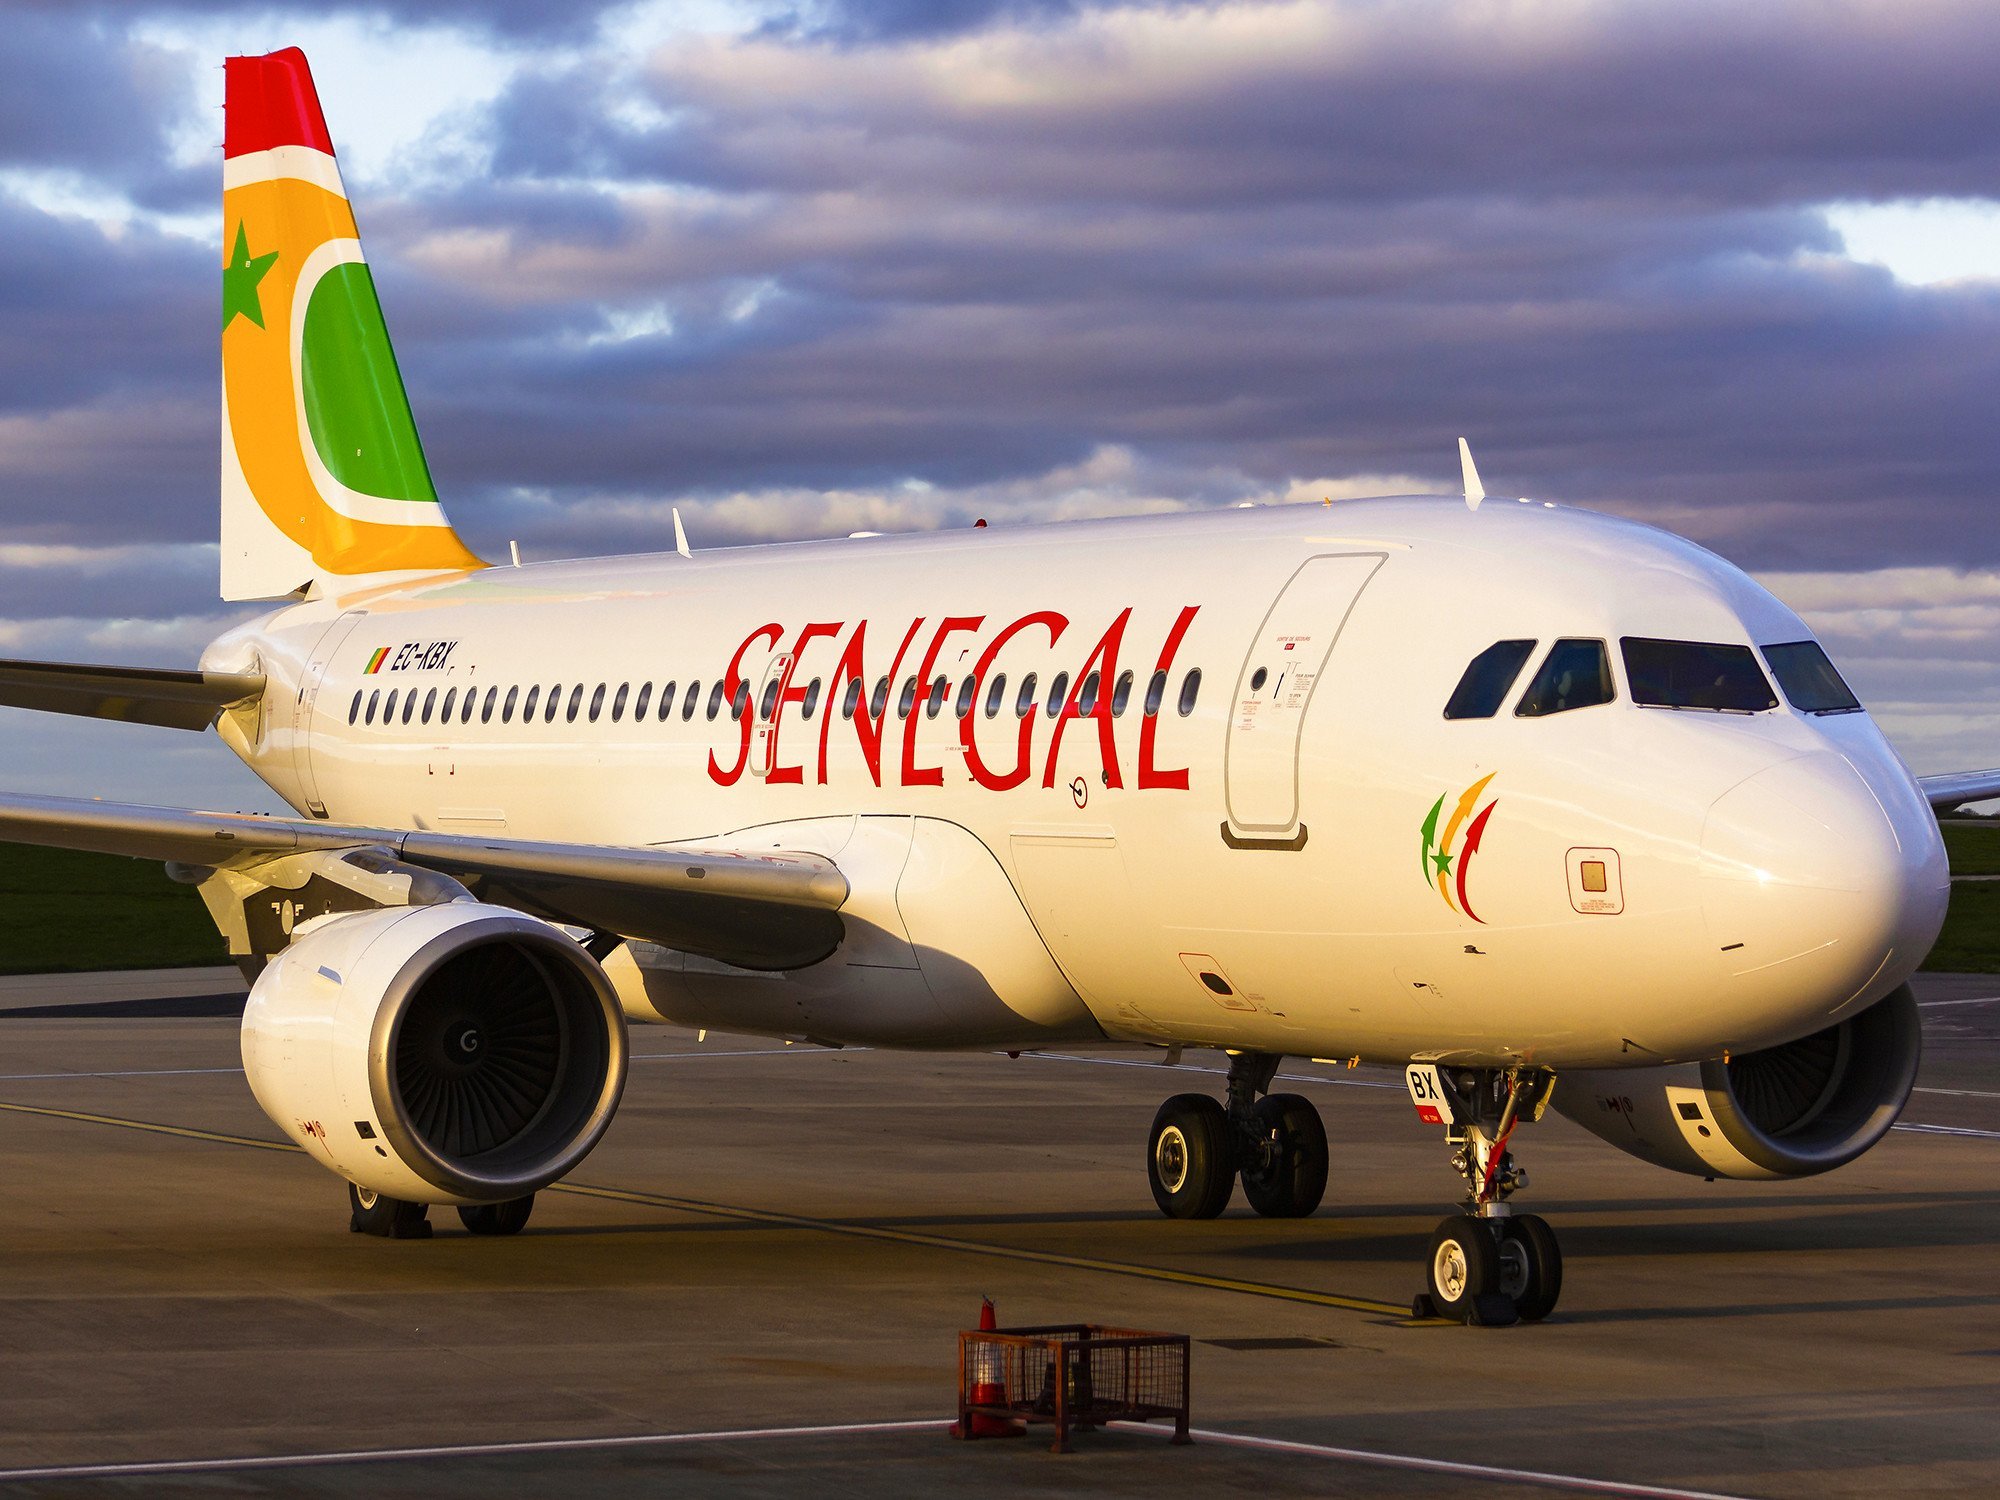 Senegal Airlines plans to gradually resume its international flights